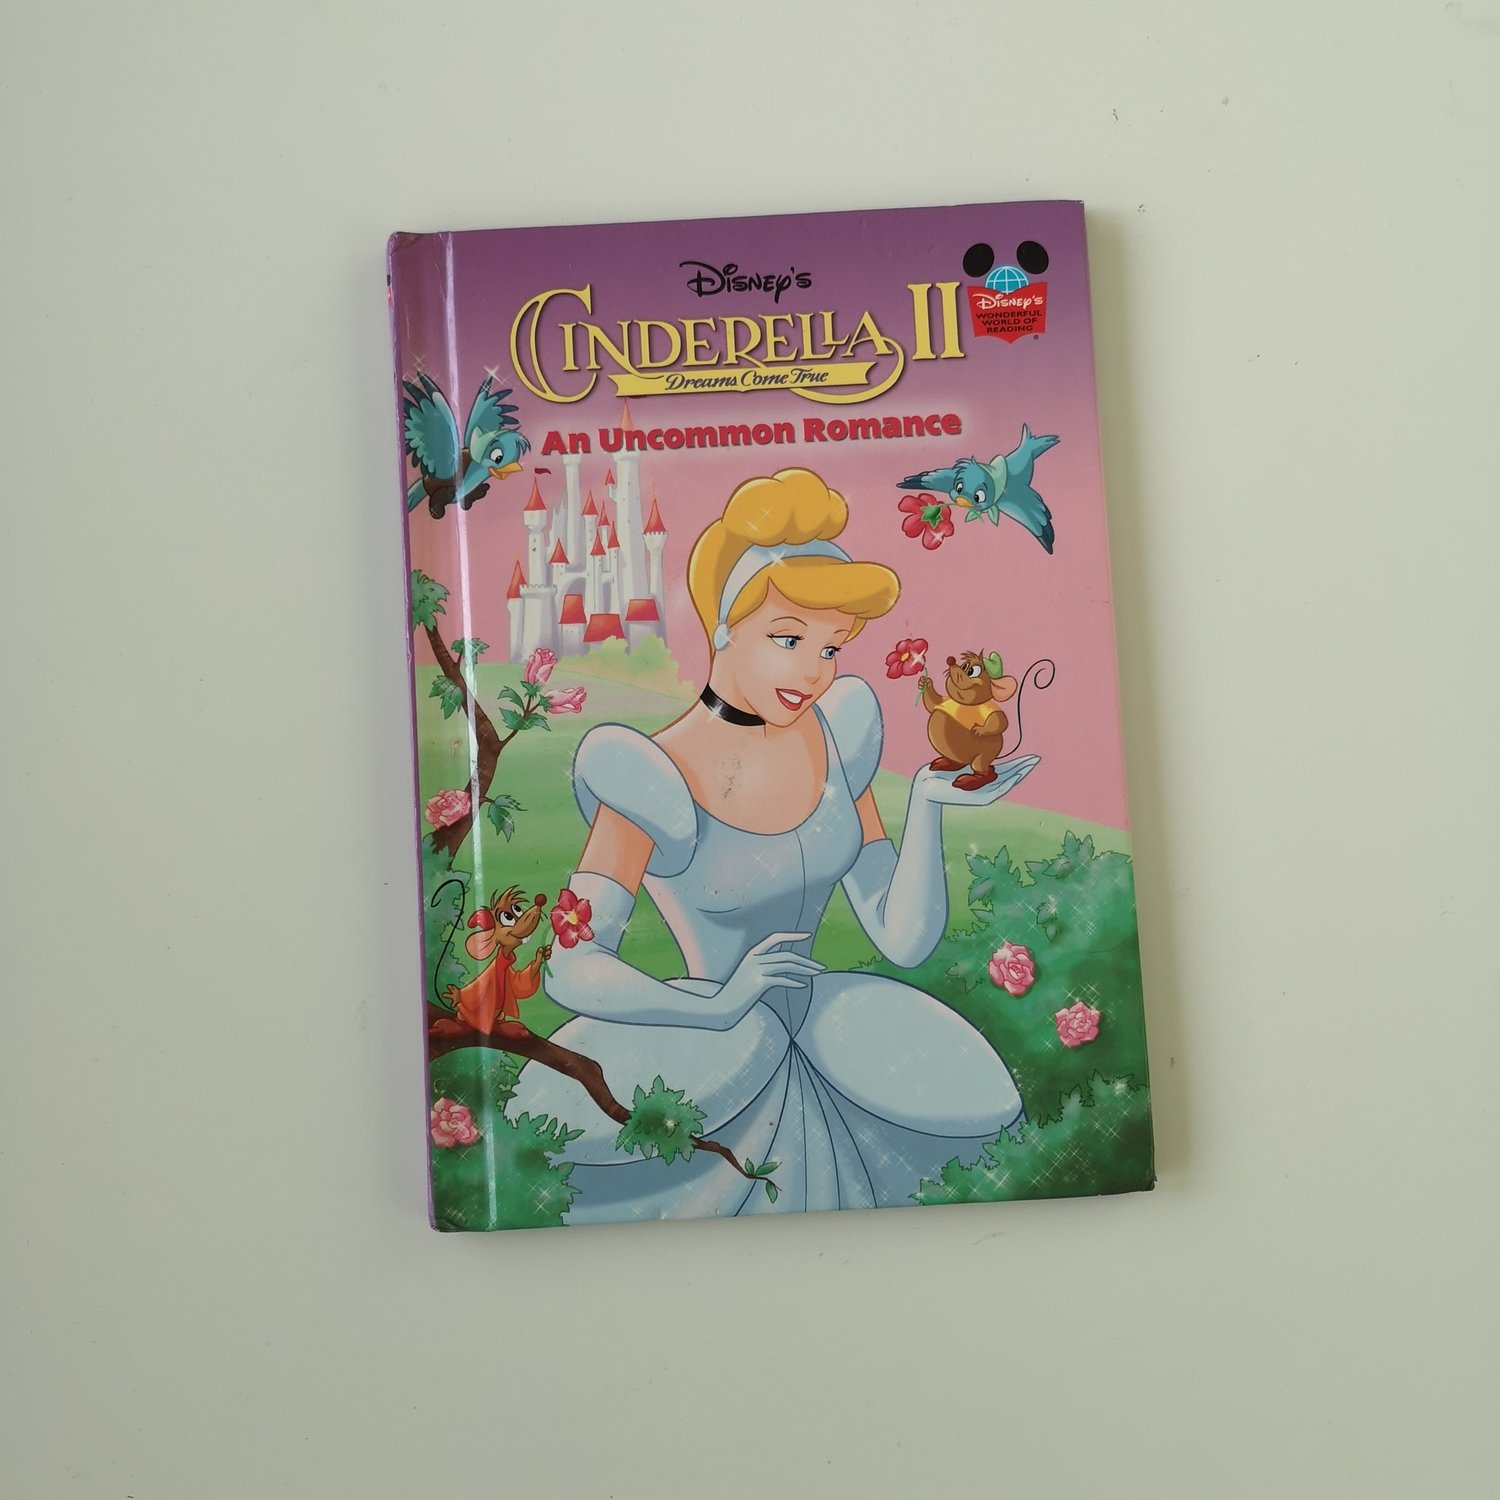 Cinderella II Notebook - an uncommon romance